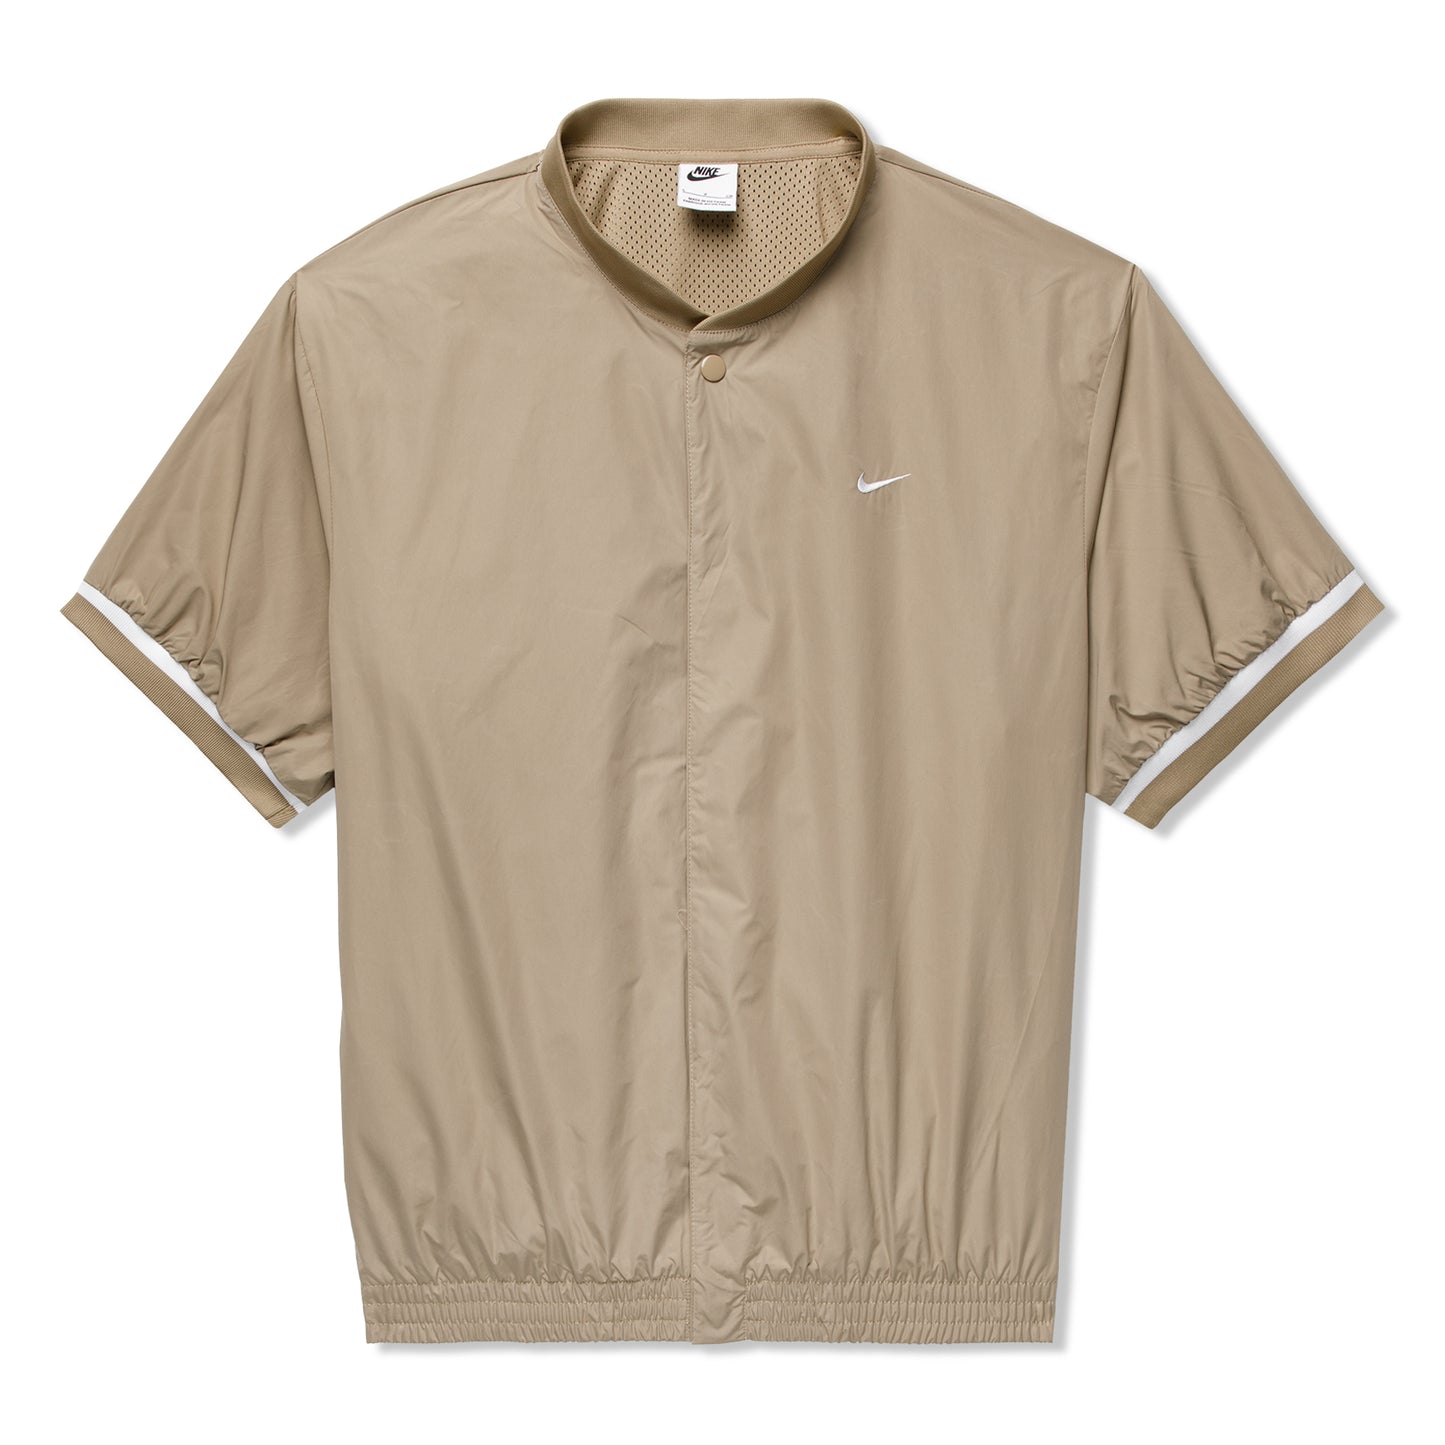 Nike Authentics Warm-Up Shirt (Khaki/White)